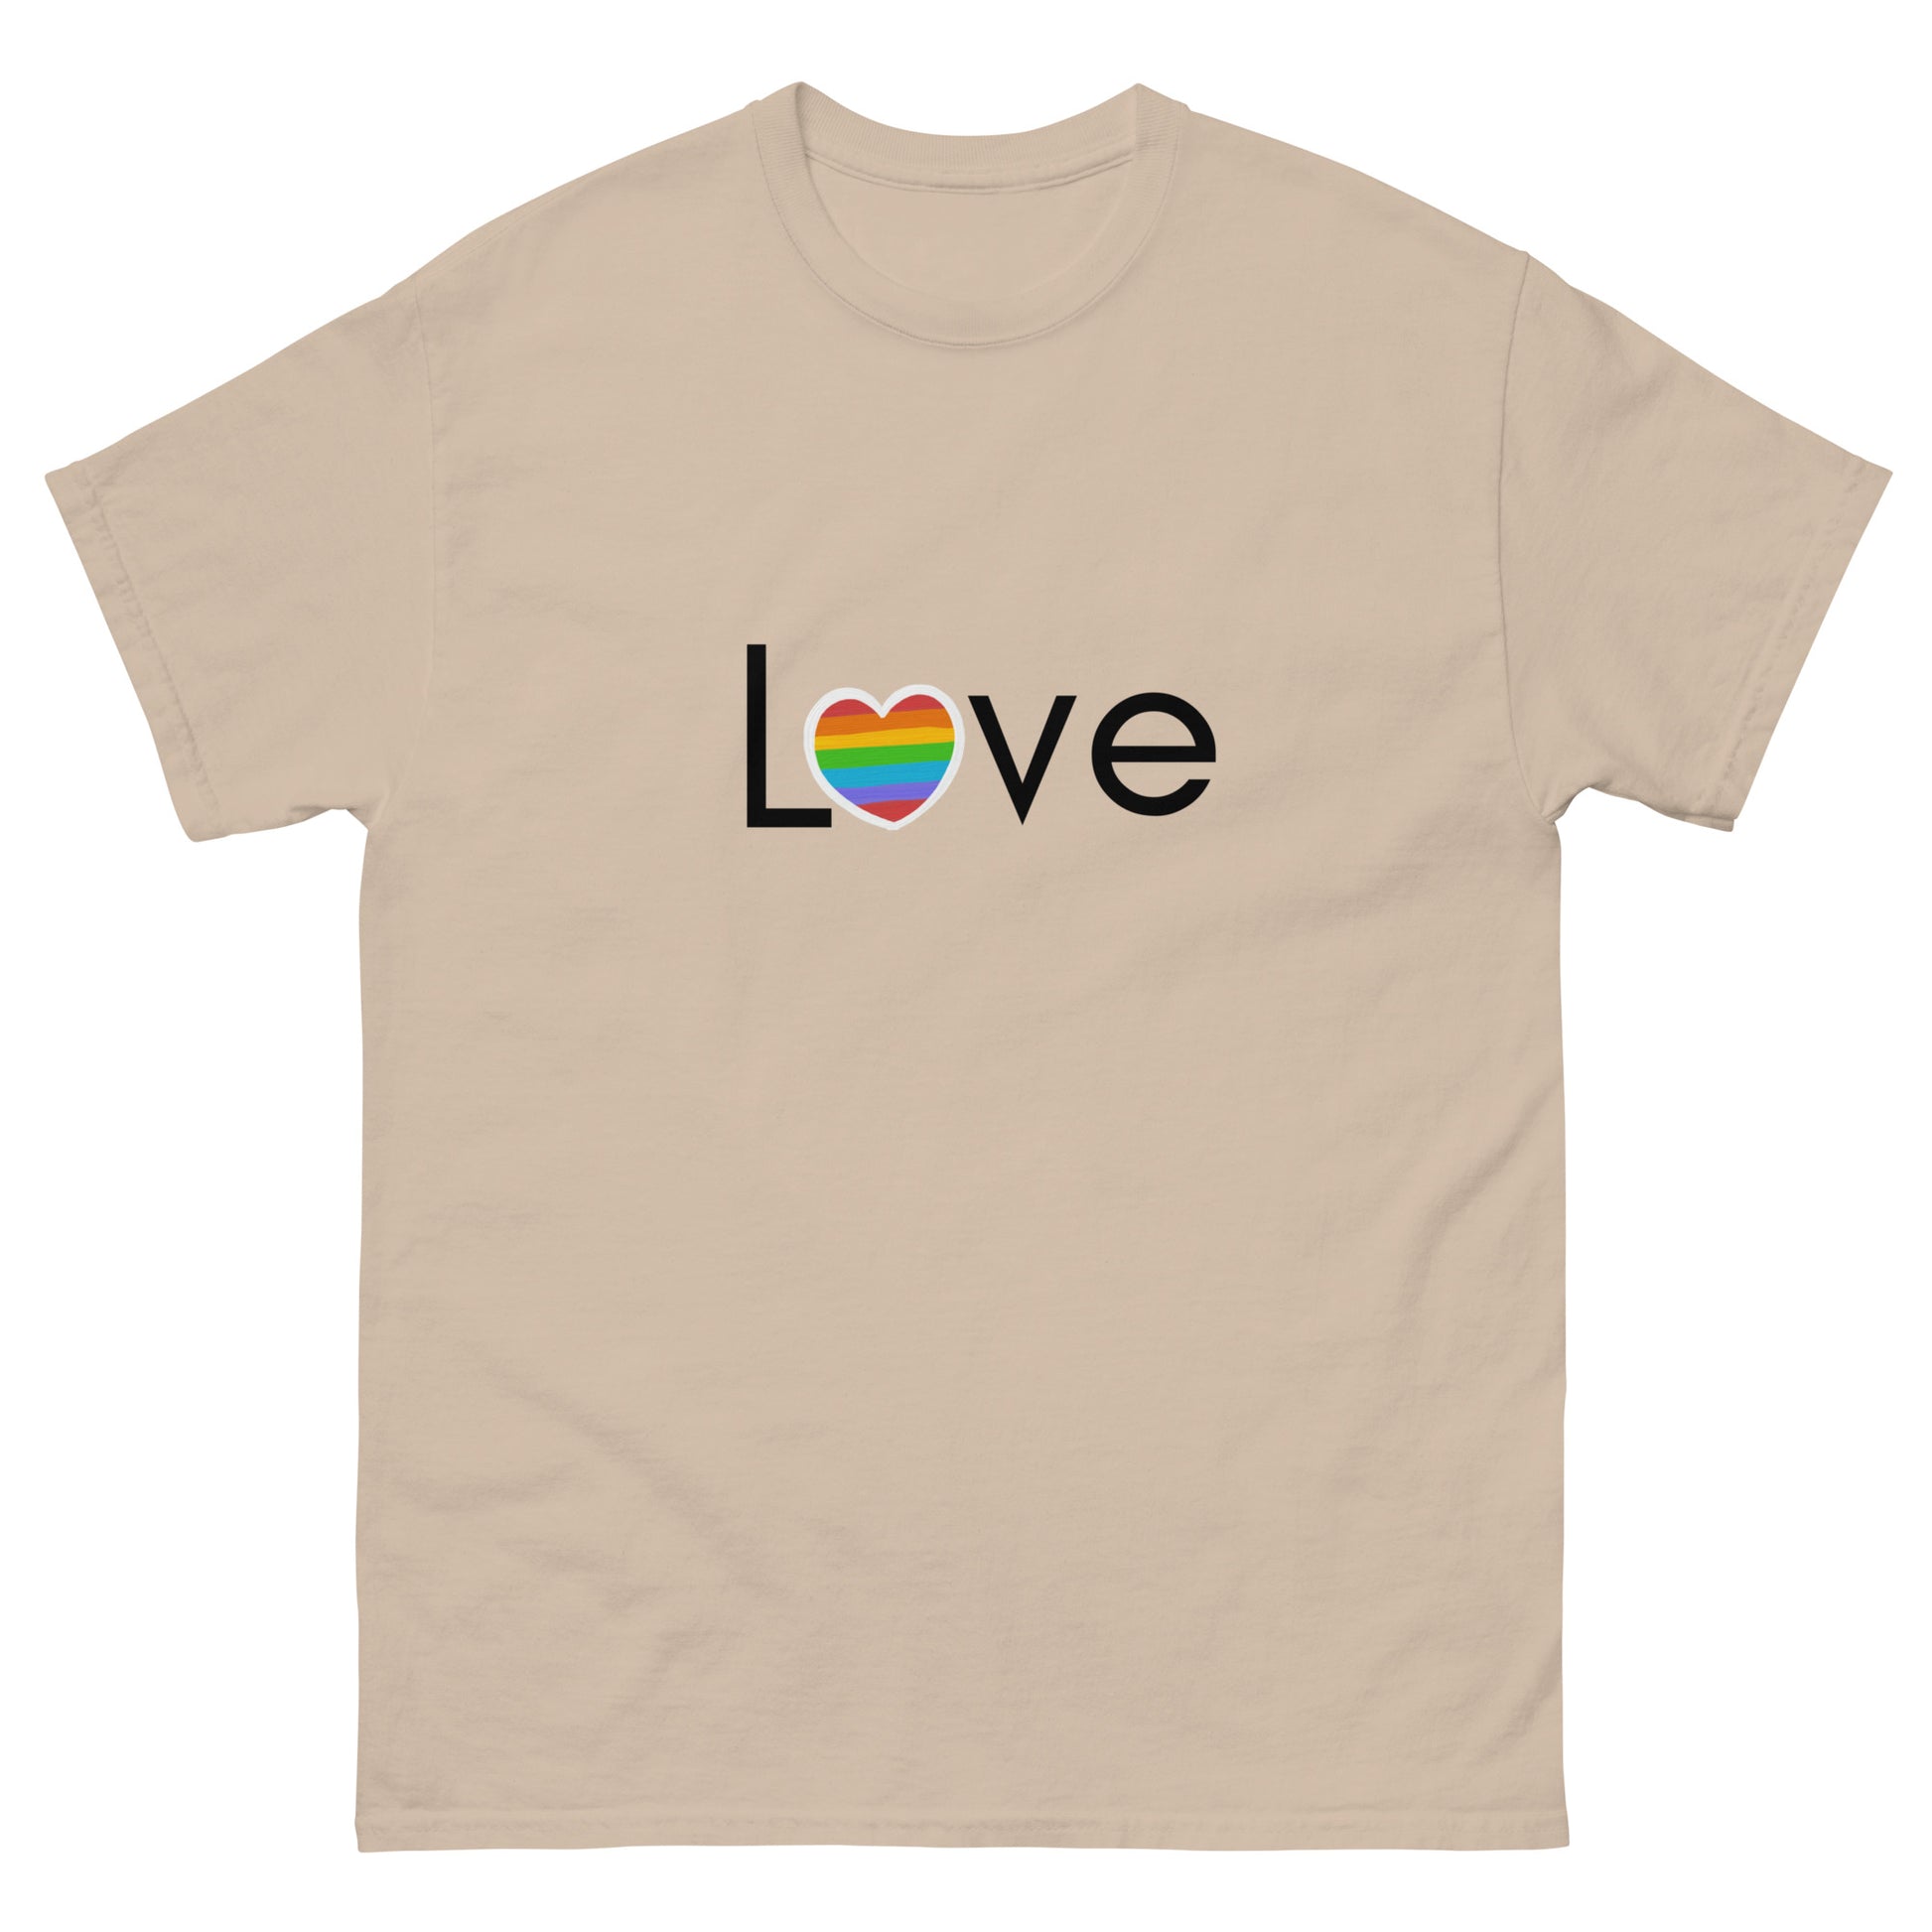 Love T-Shirt - The Good Life Vibe